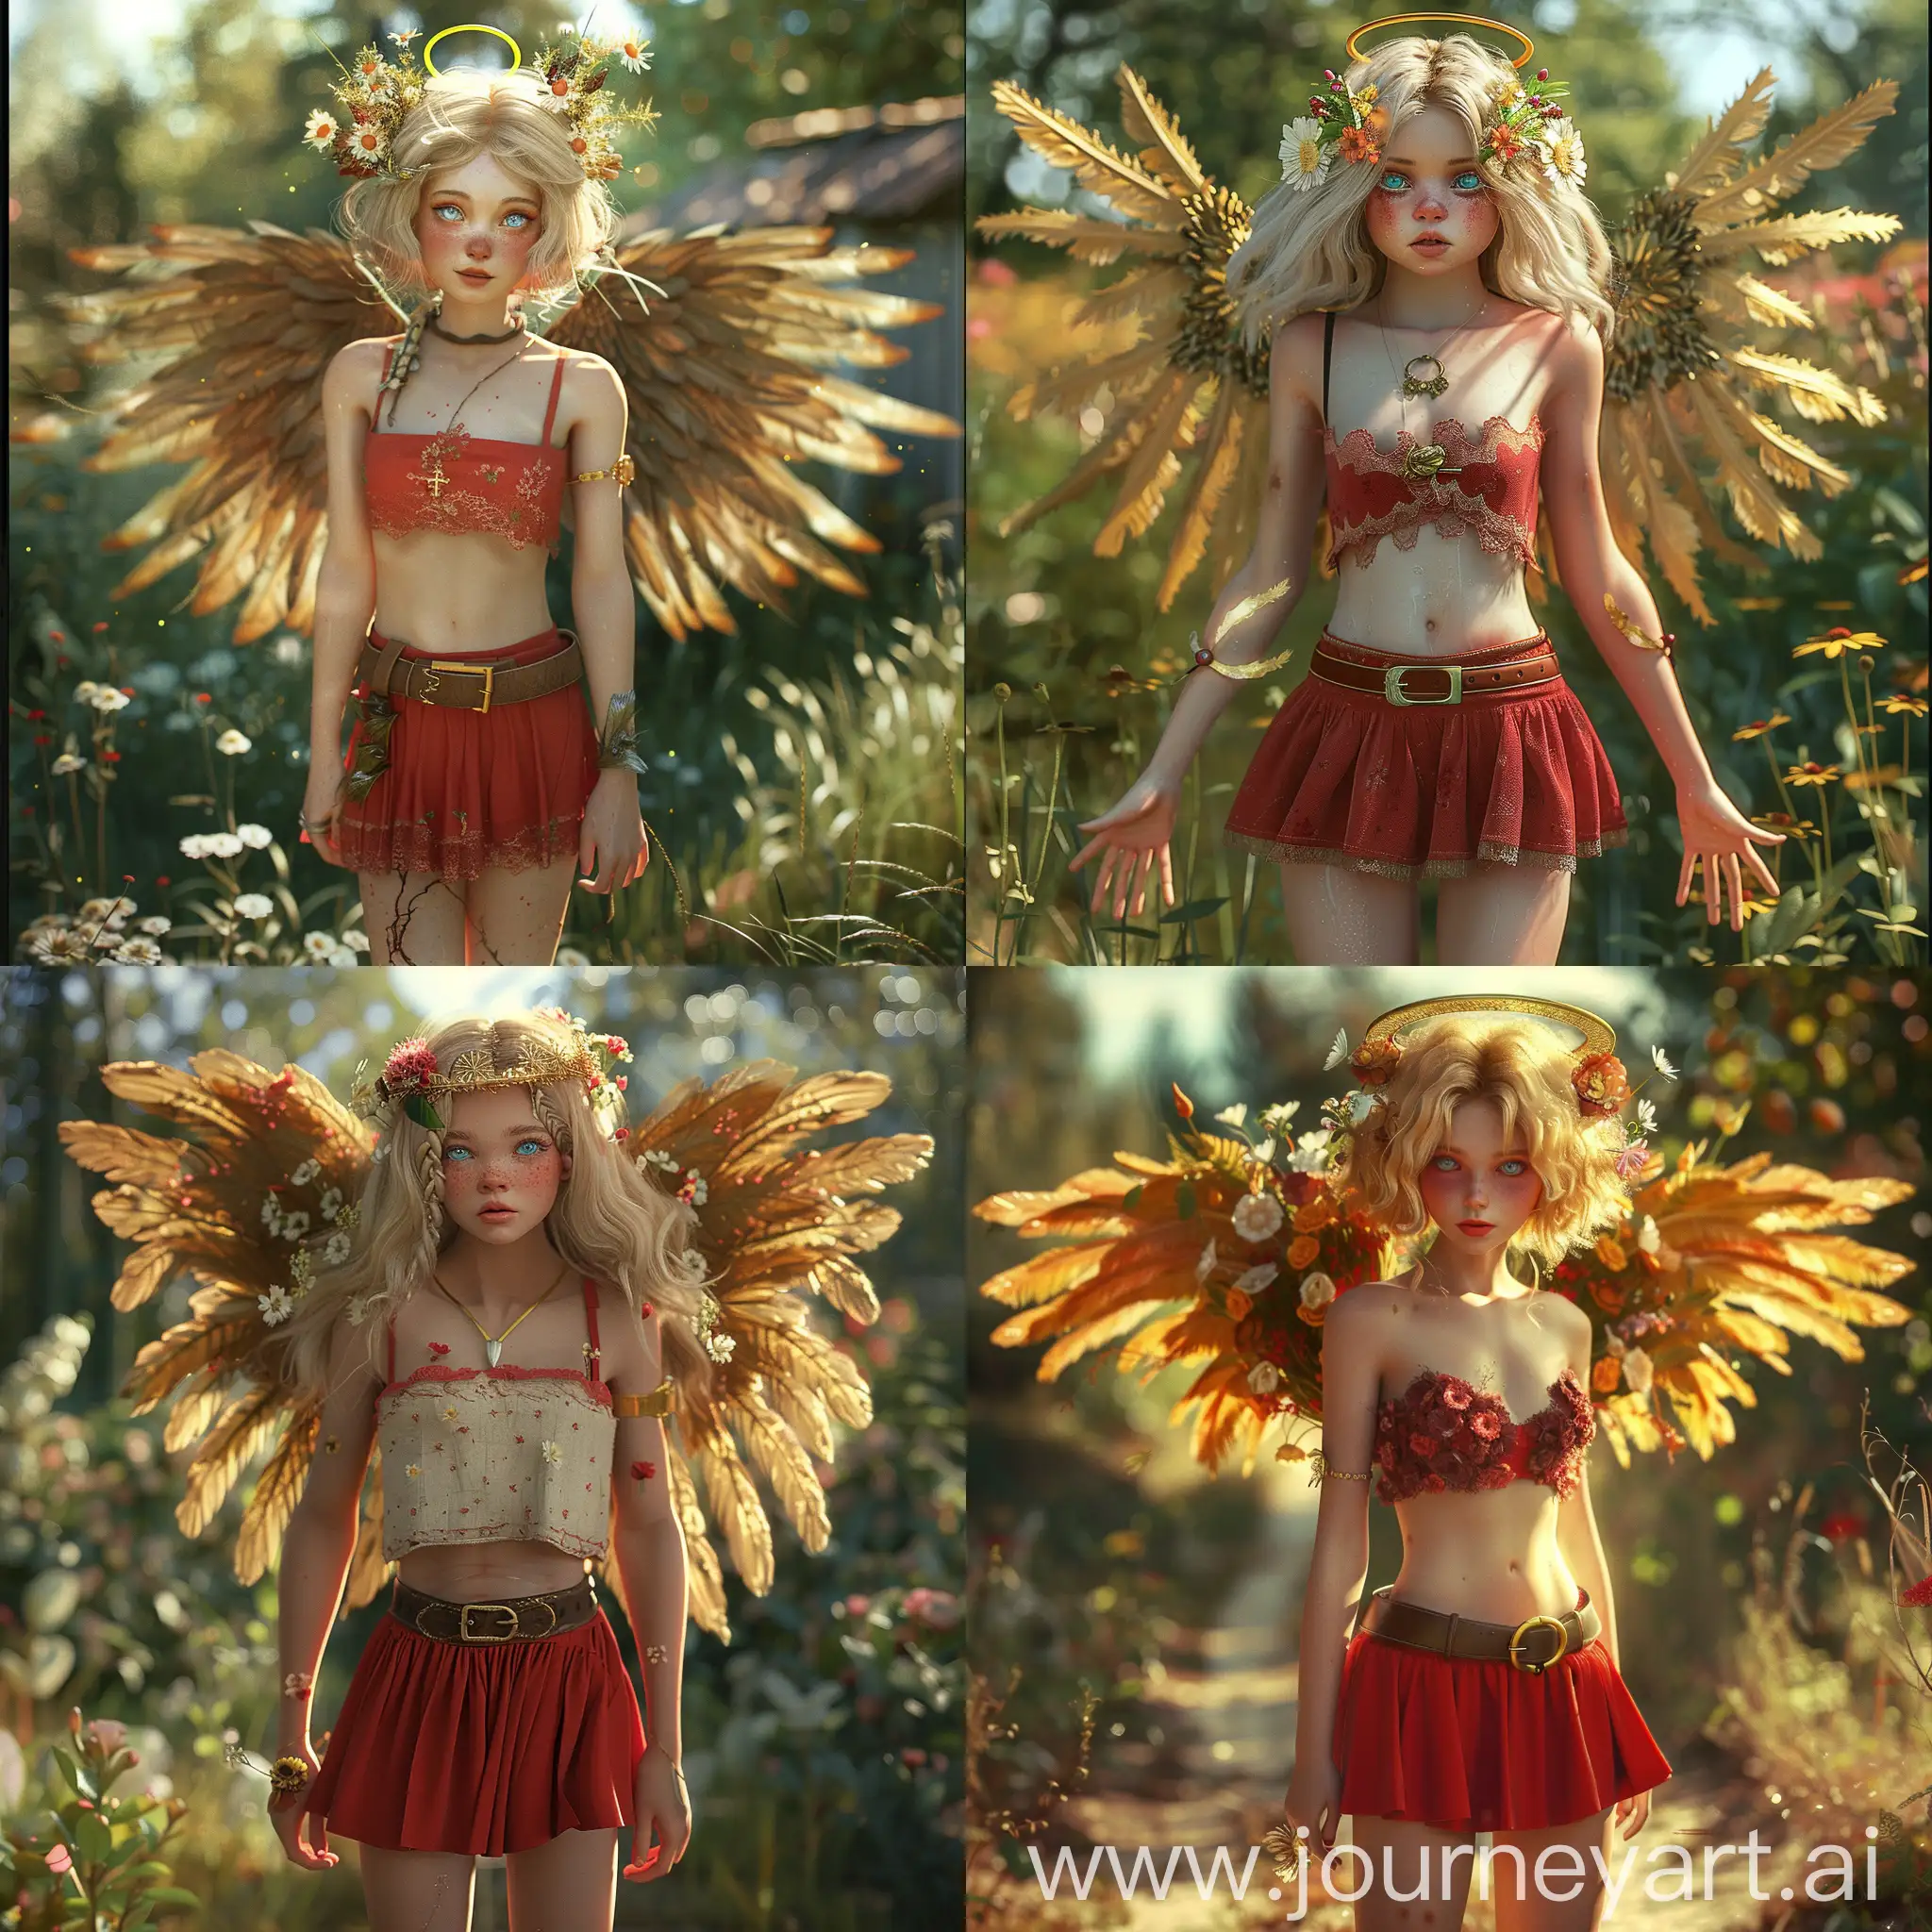 Solo-Angelic-Girl-with-Golden-Wings-in-Garden